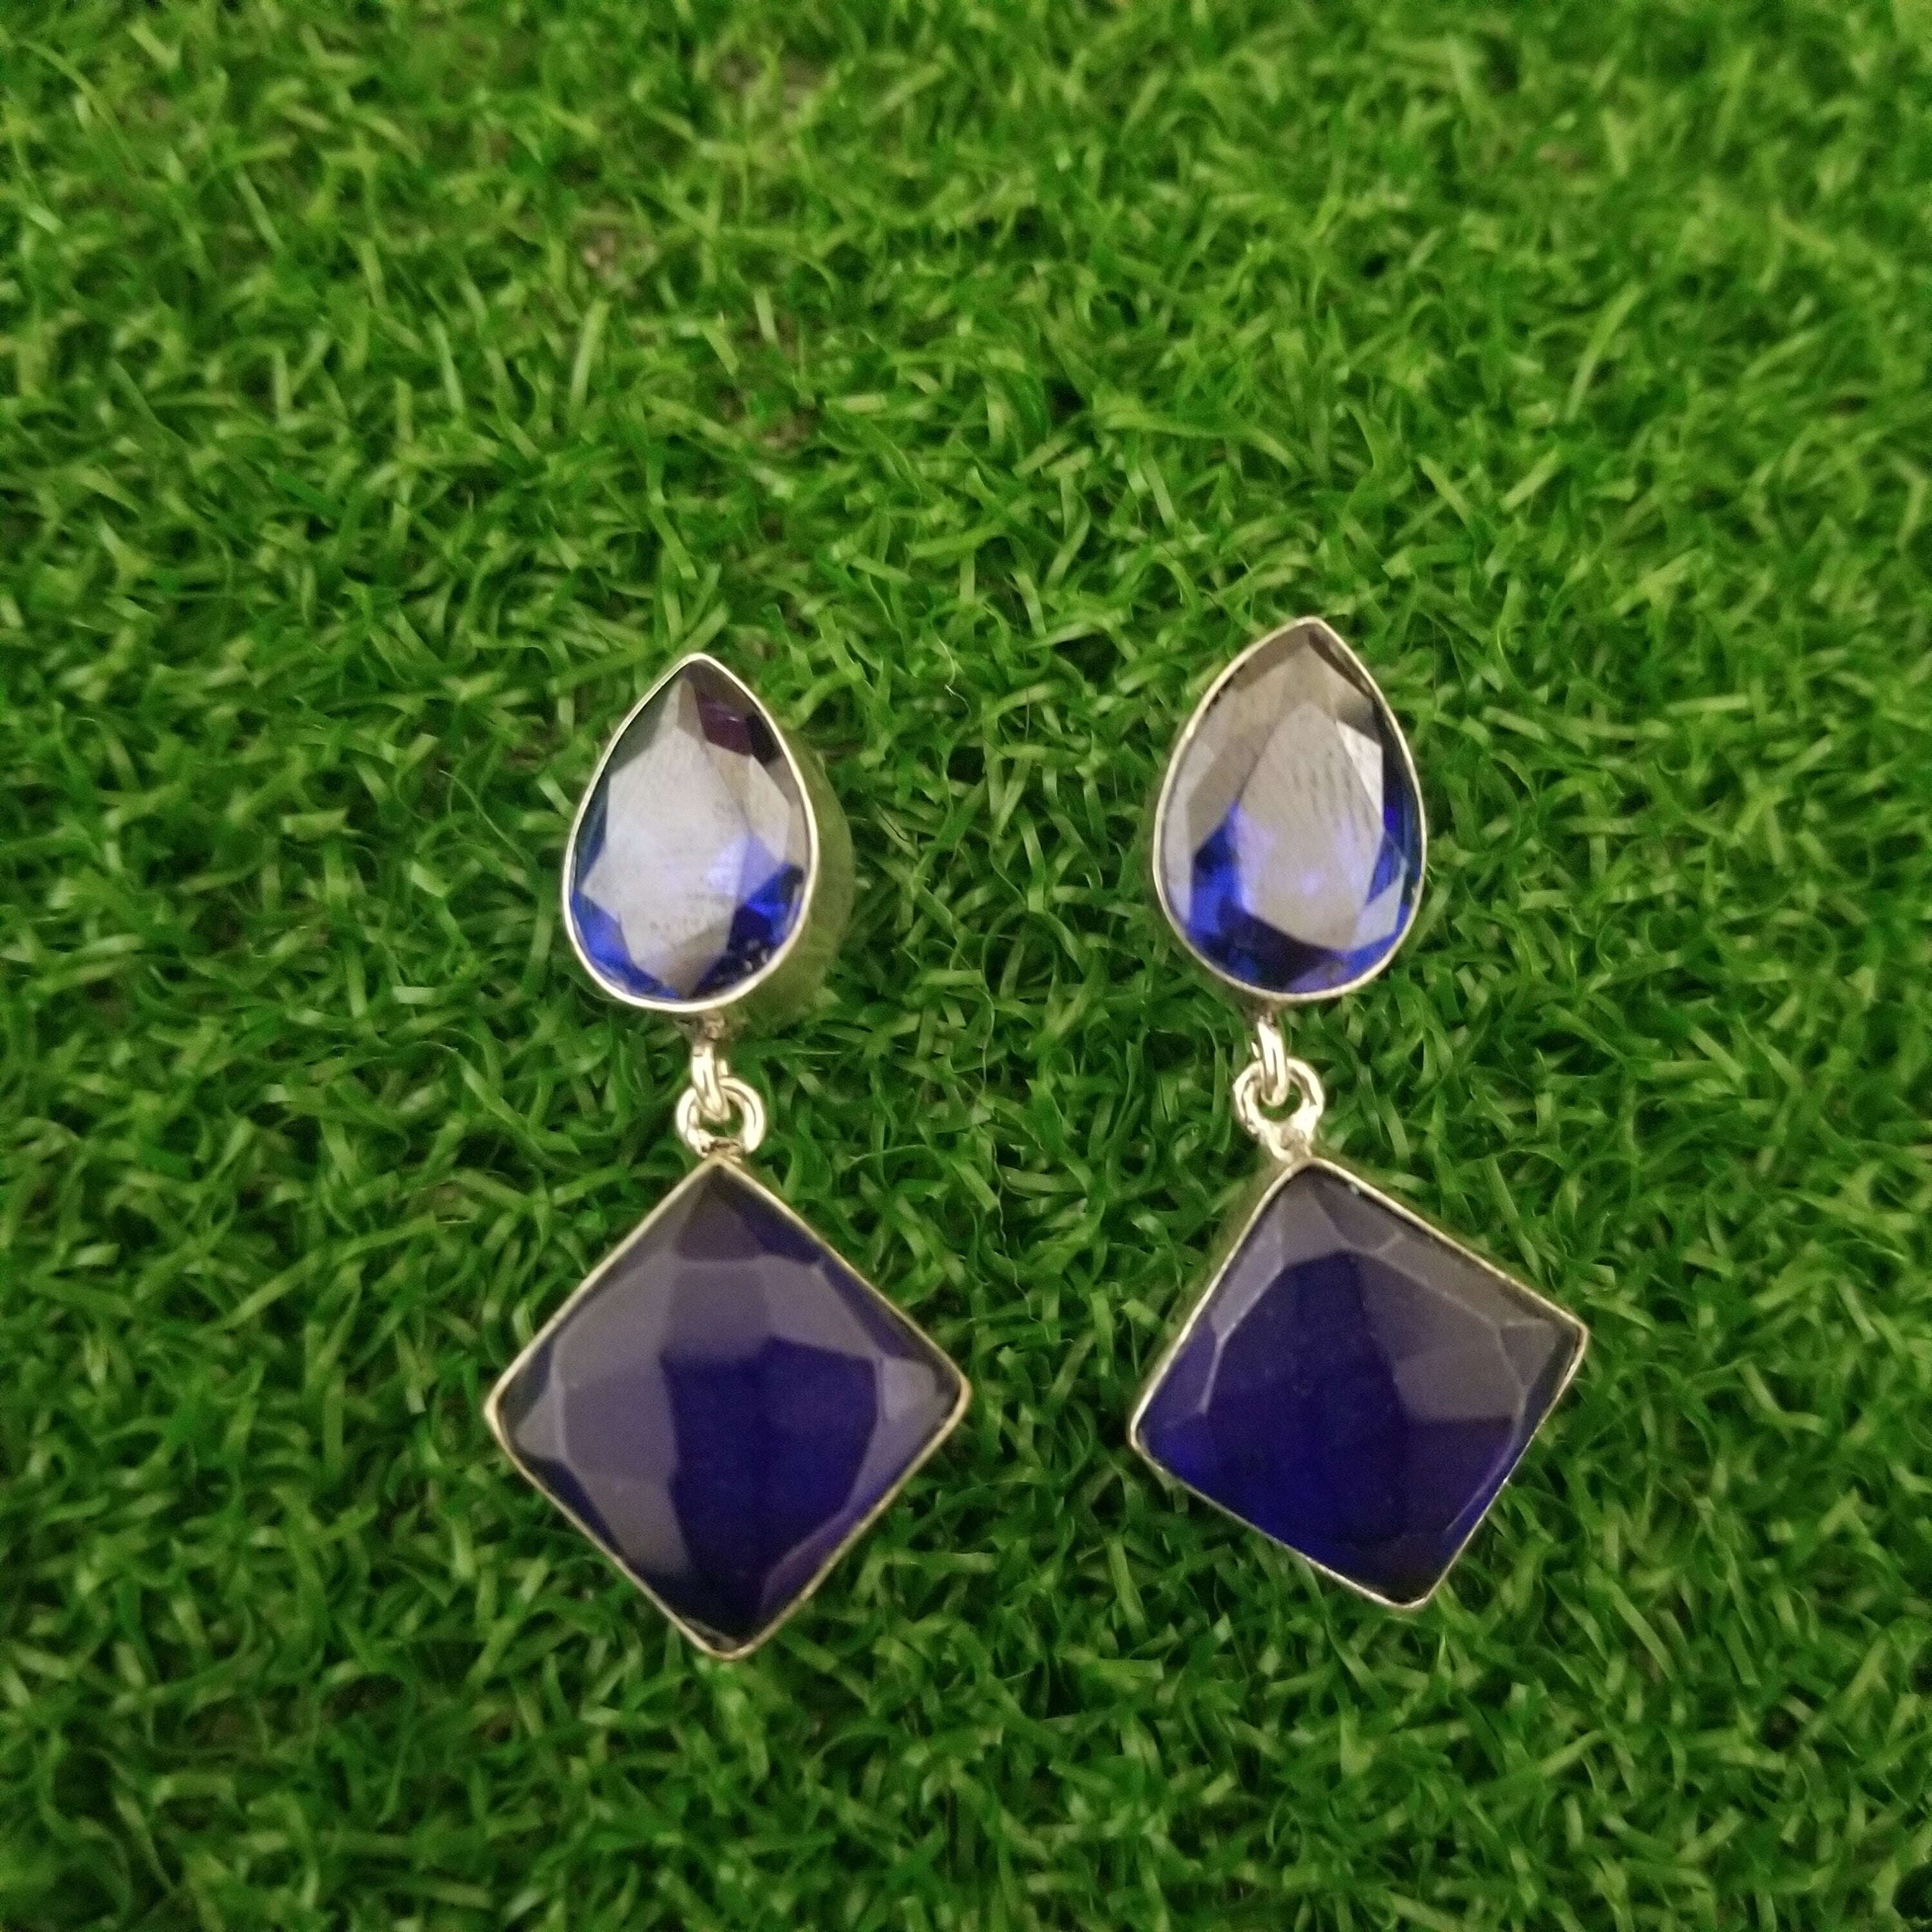 Oxidized Blue stones Earrings Jhumki Jhumka for Women and Girls